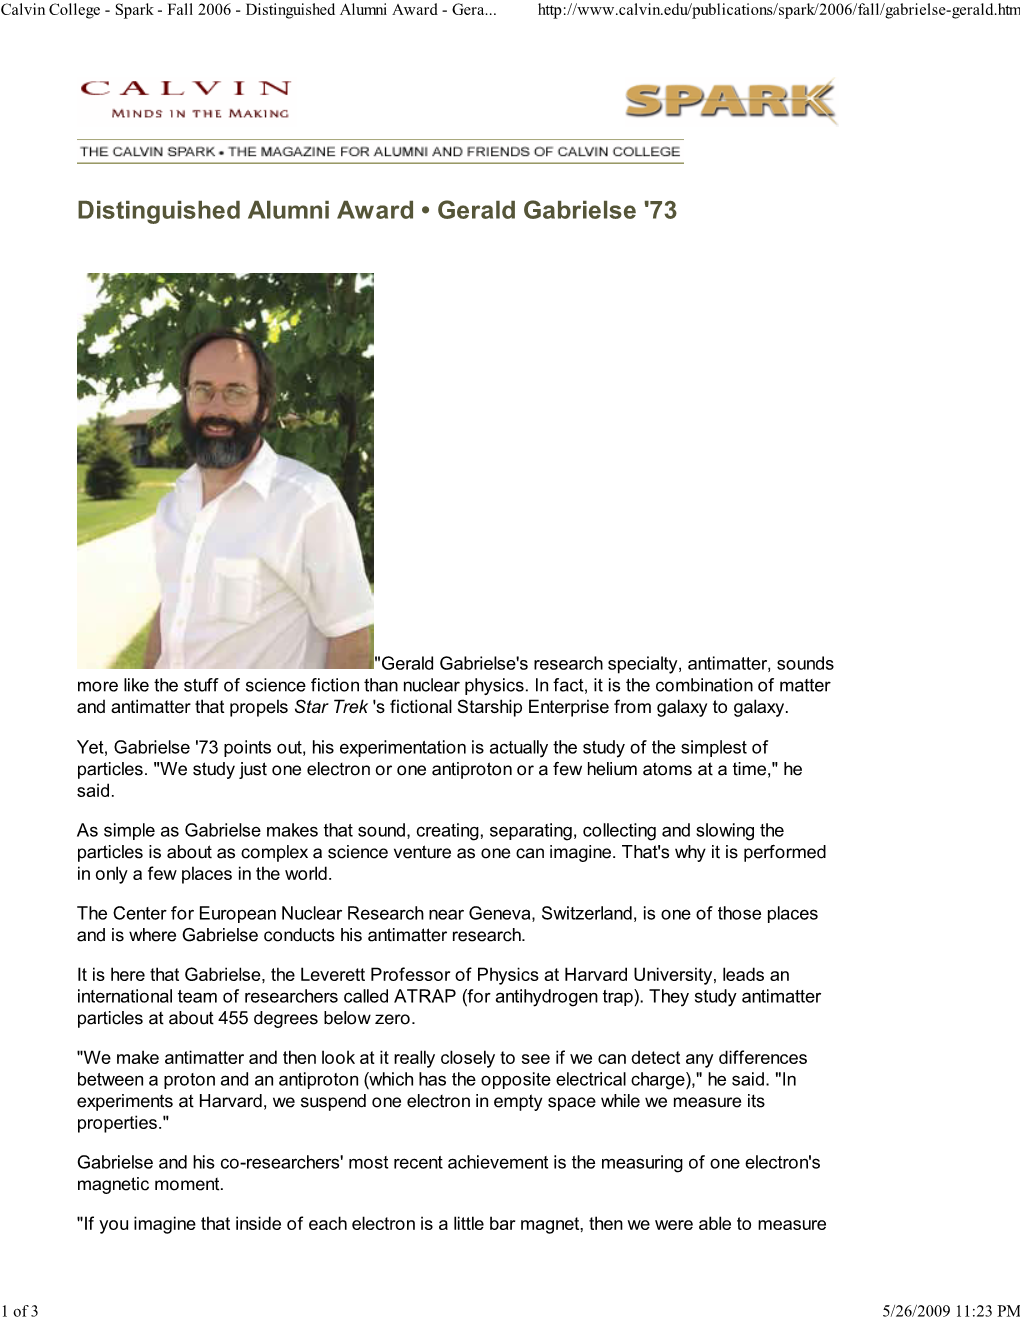 Distinguished Alumni Award - Gera